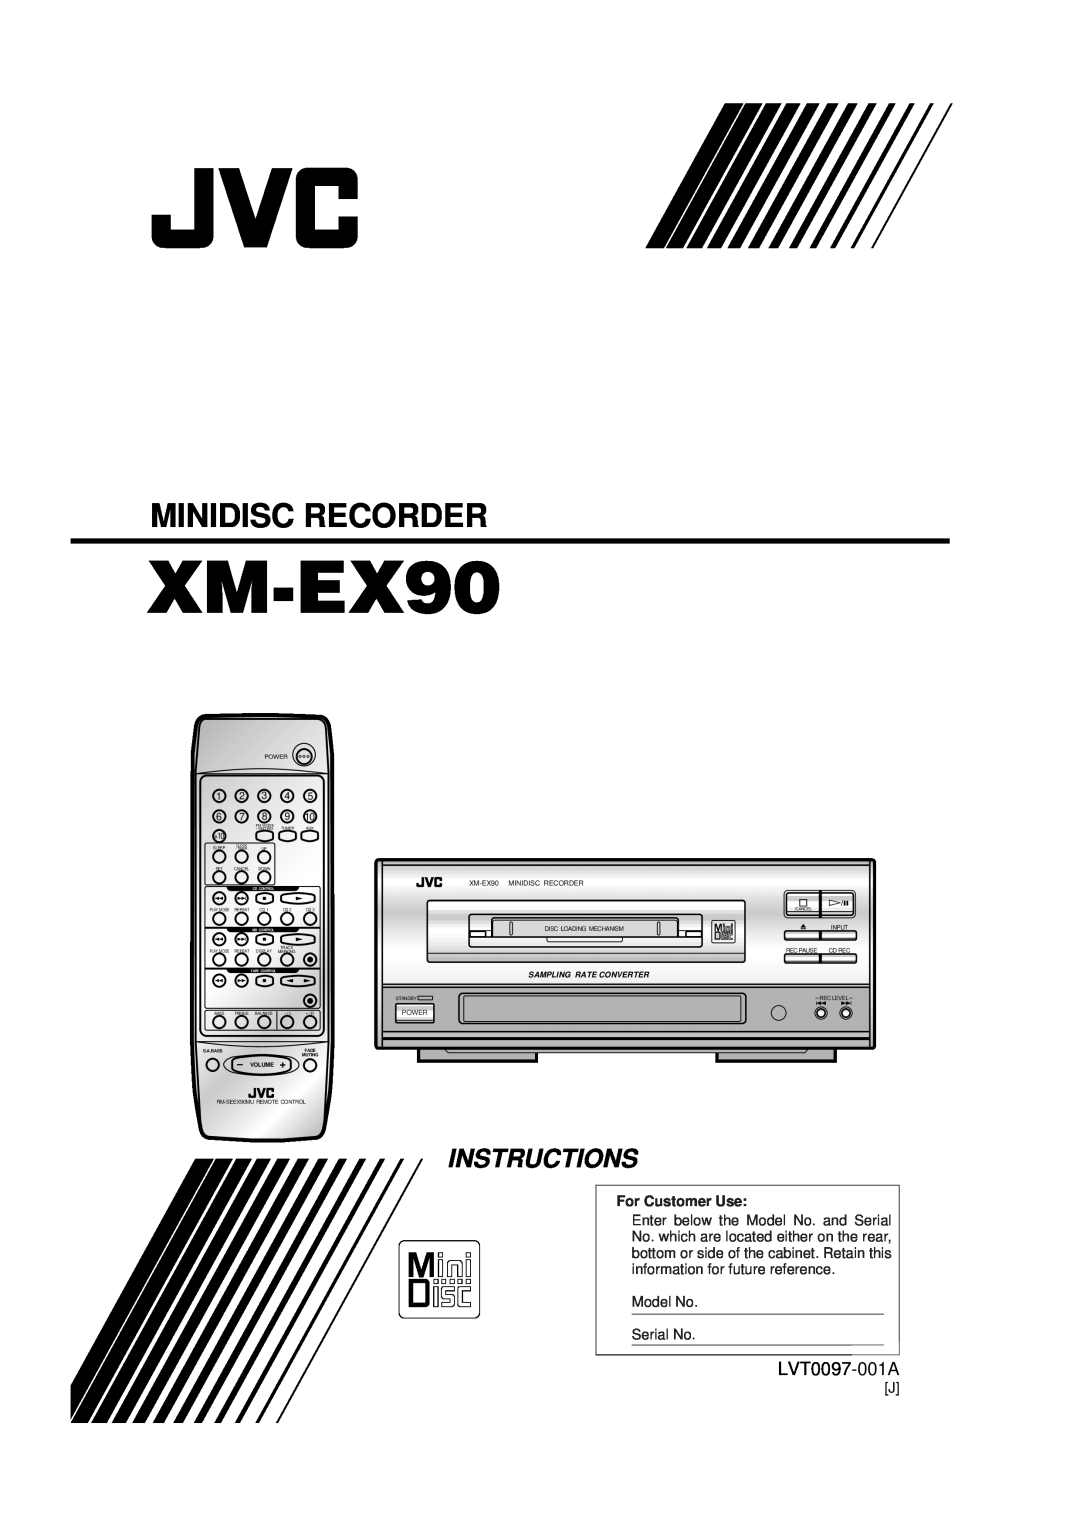 JVC XM-EX90 manual LVT0097-001A, Minidisc Recorder, Instructions, For Customer Use, 1 2, Sampling Rate Converter, Power 